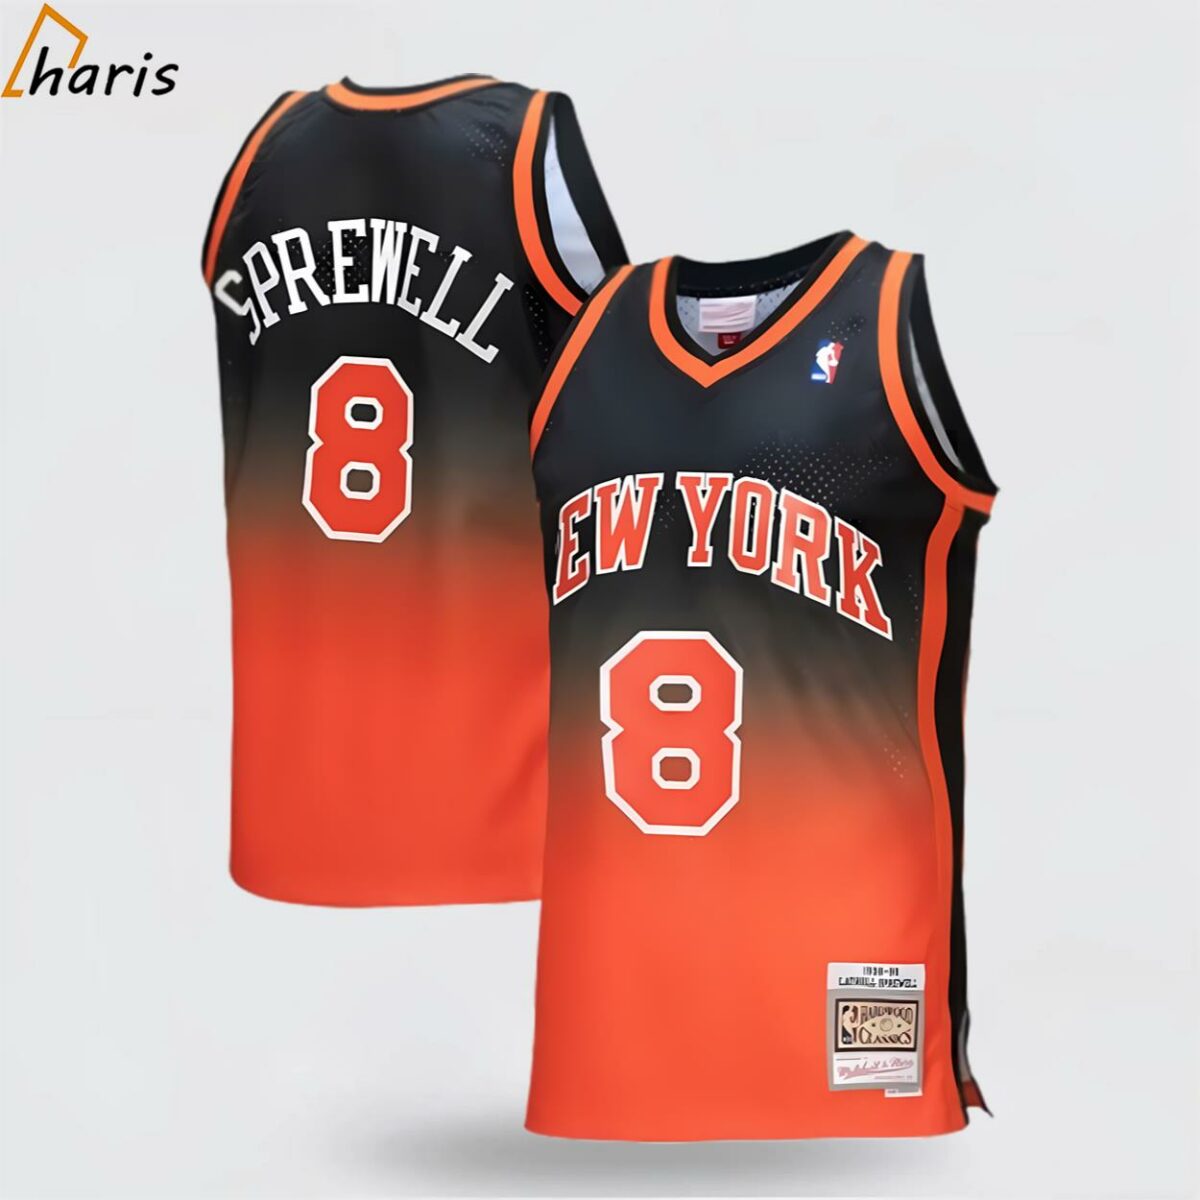 Latrell Sprewell New York Knicks Fadeaway Swingman Player Jersey Orange Black 1 jersey